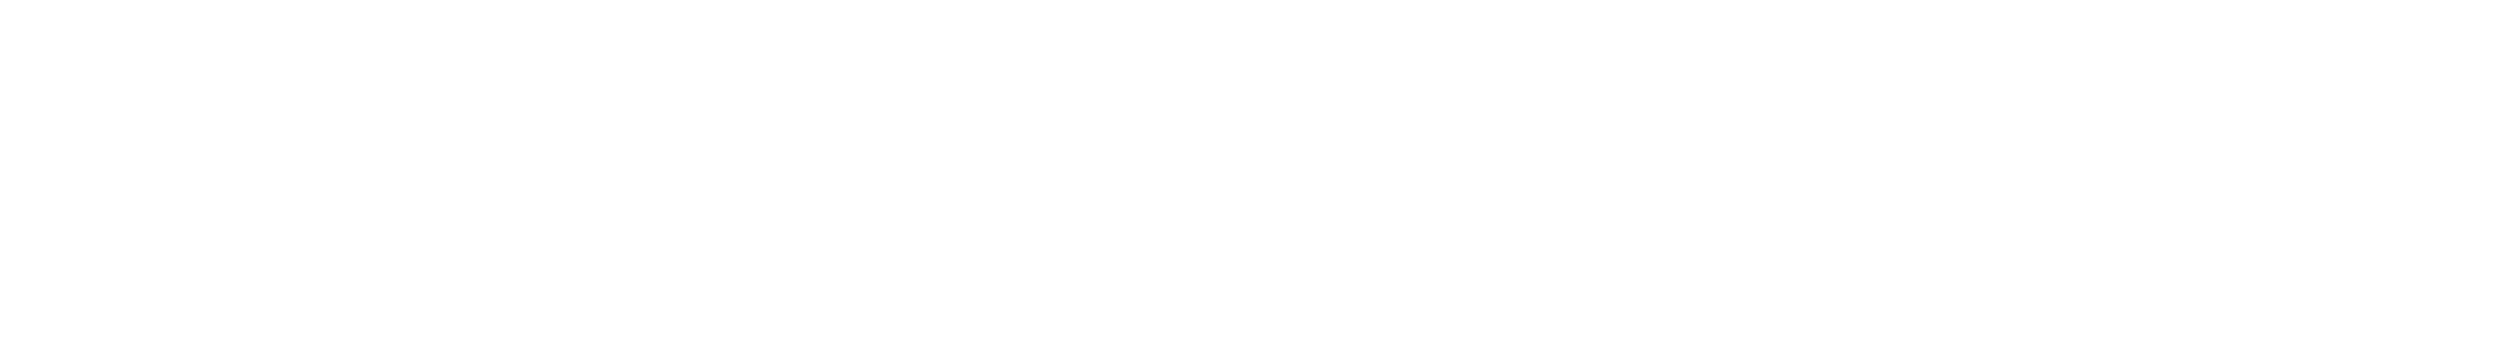 Hawai'i English Language Program Logo